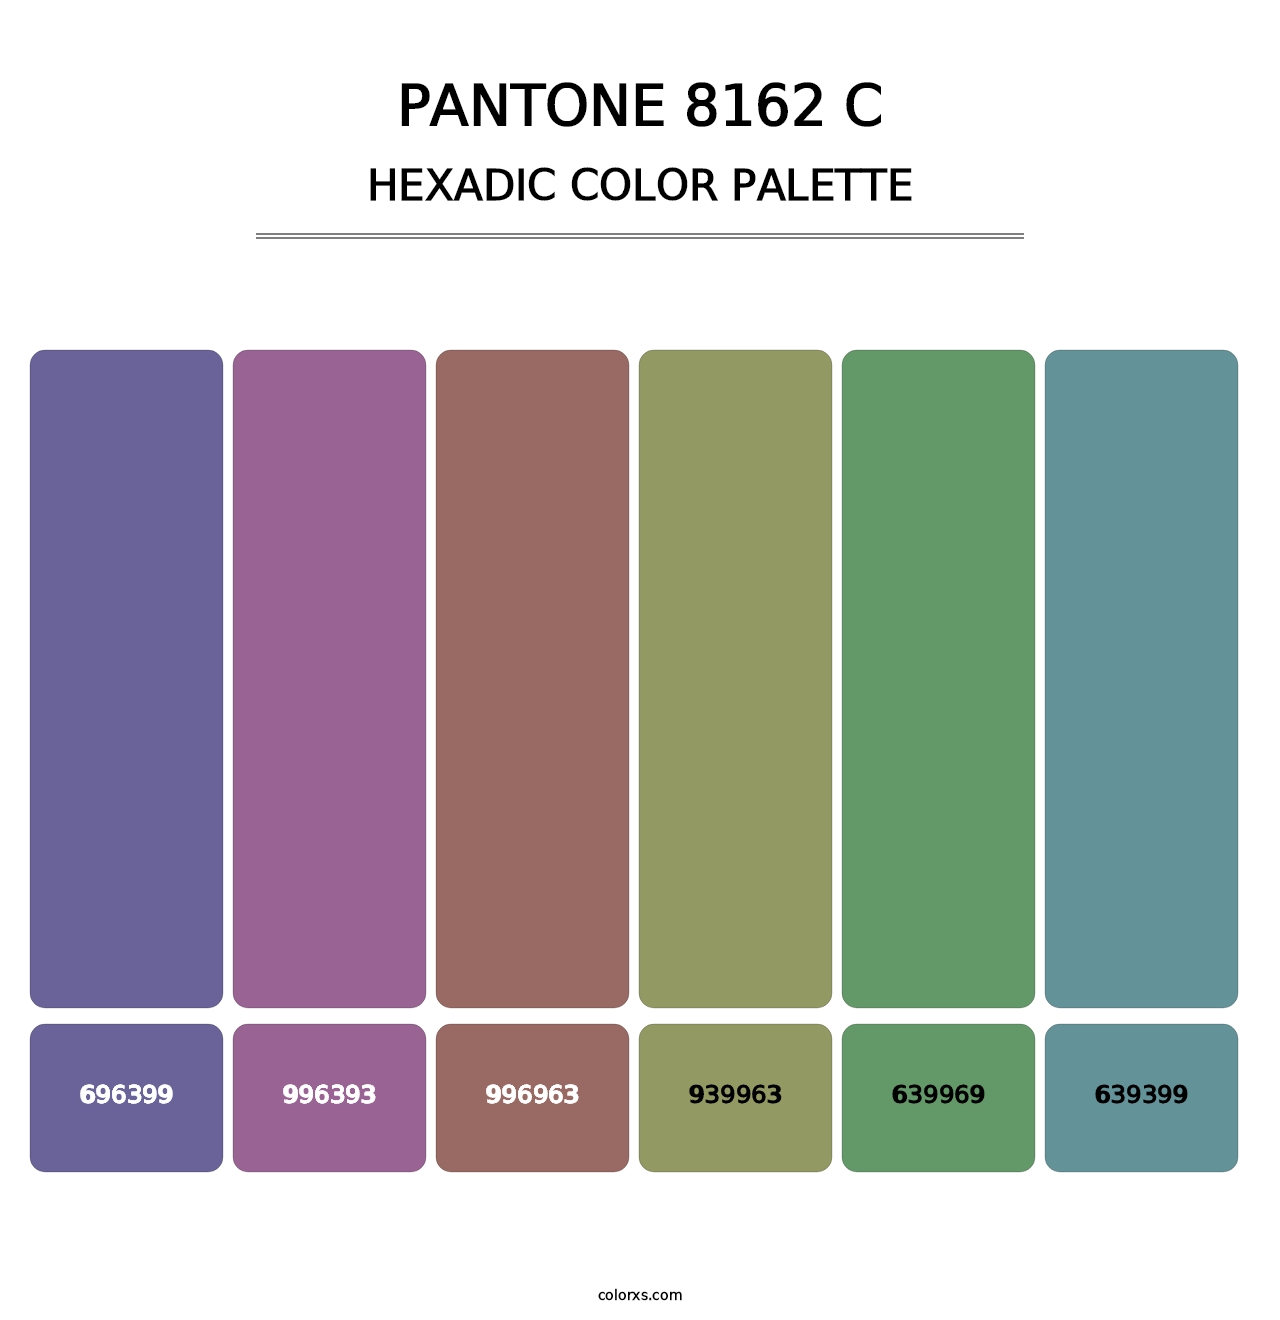 PANTONE 8162 C - Hexadic Color Palette